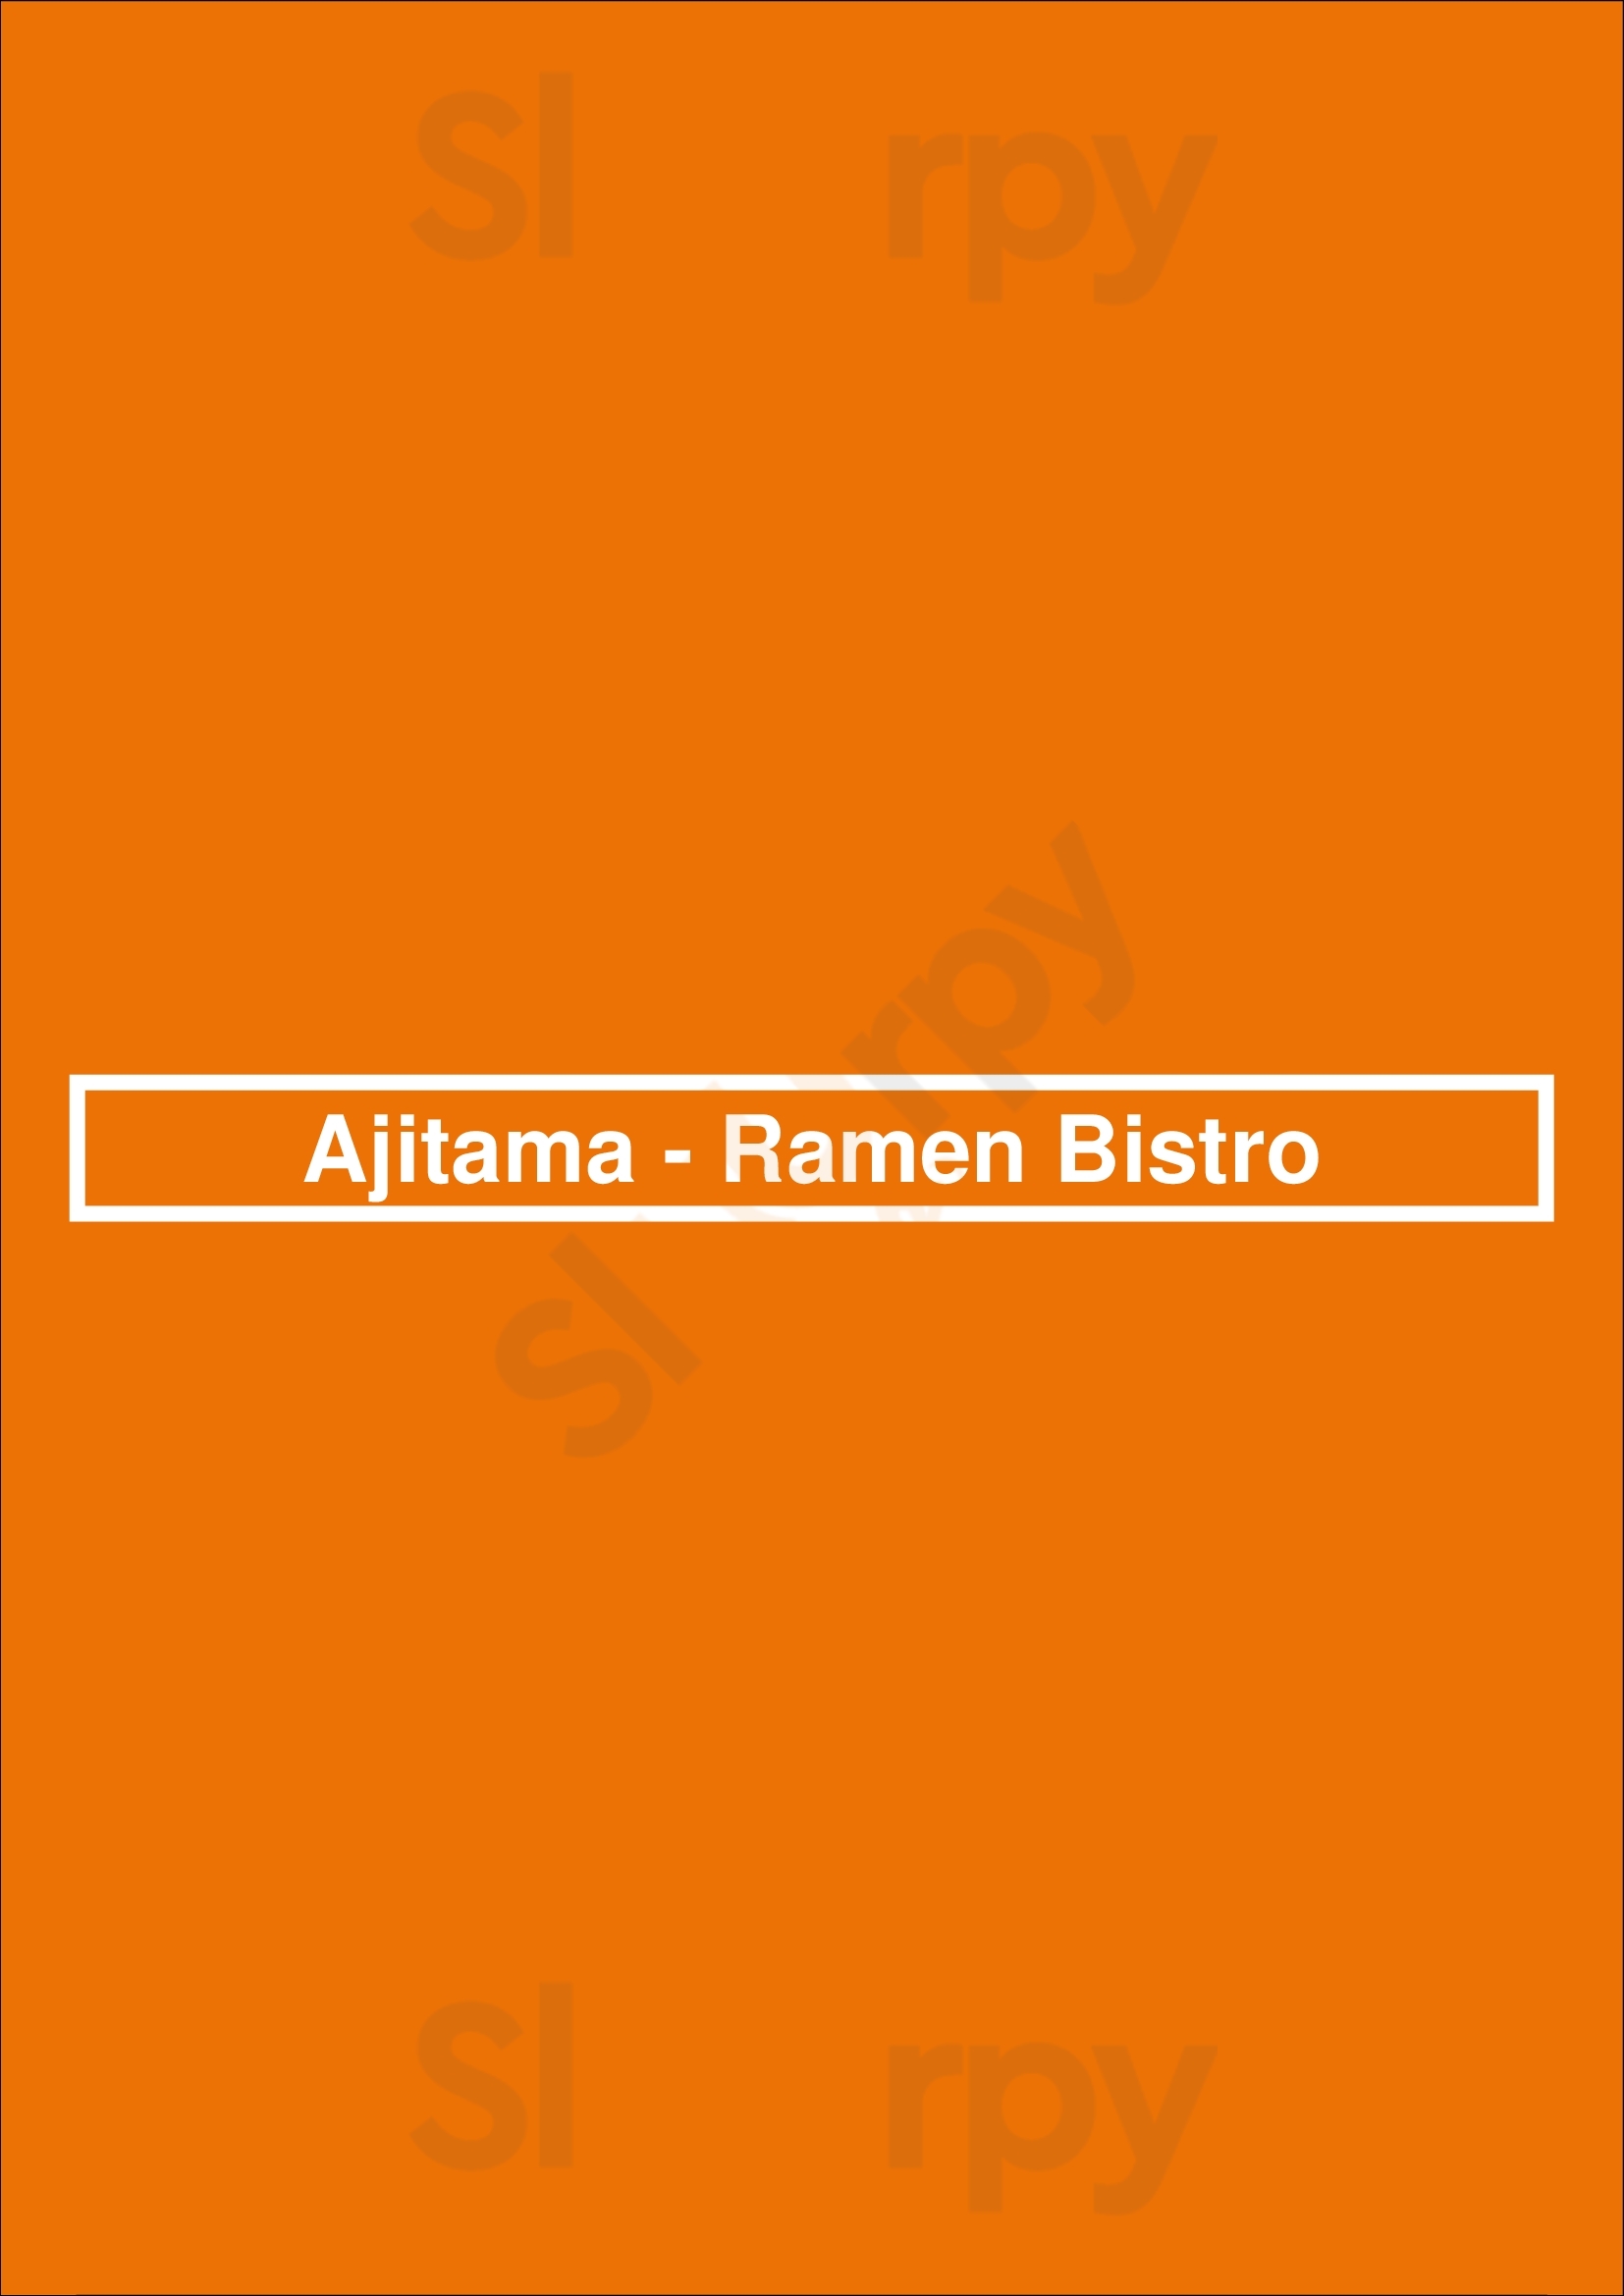 Ajitama Ramen Bistro Lisboa Menu - 1